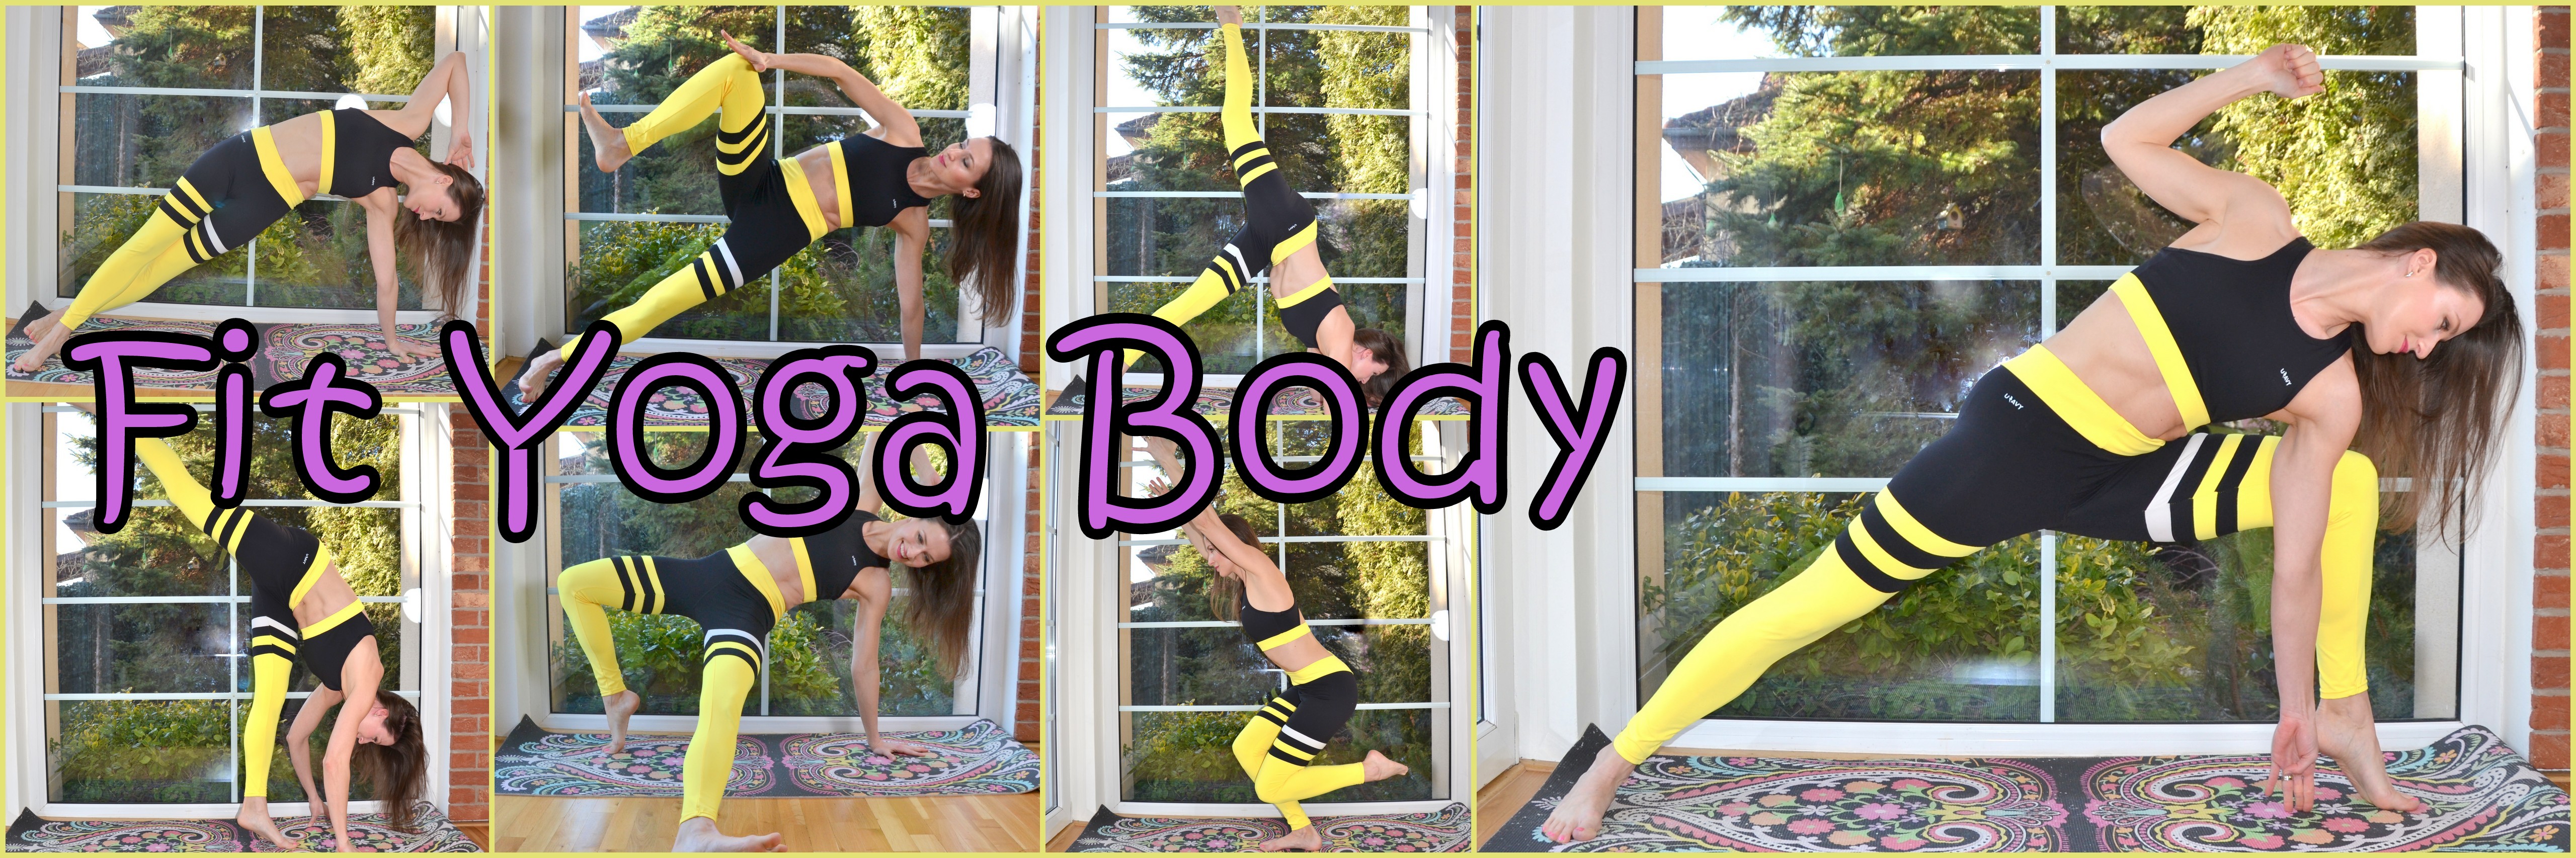 Fit Yoga Body - TOP